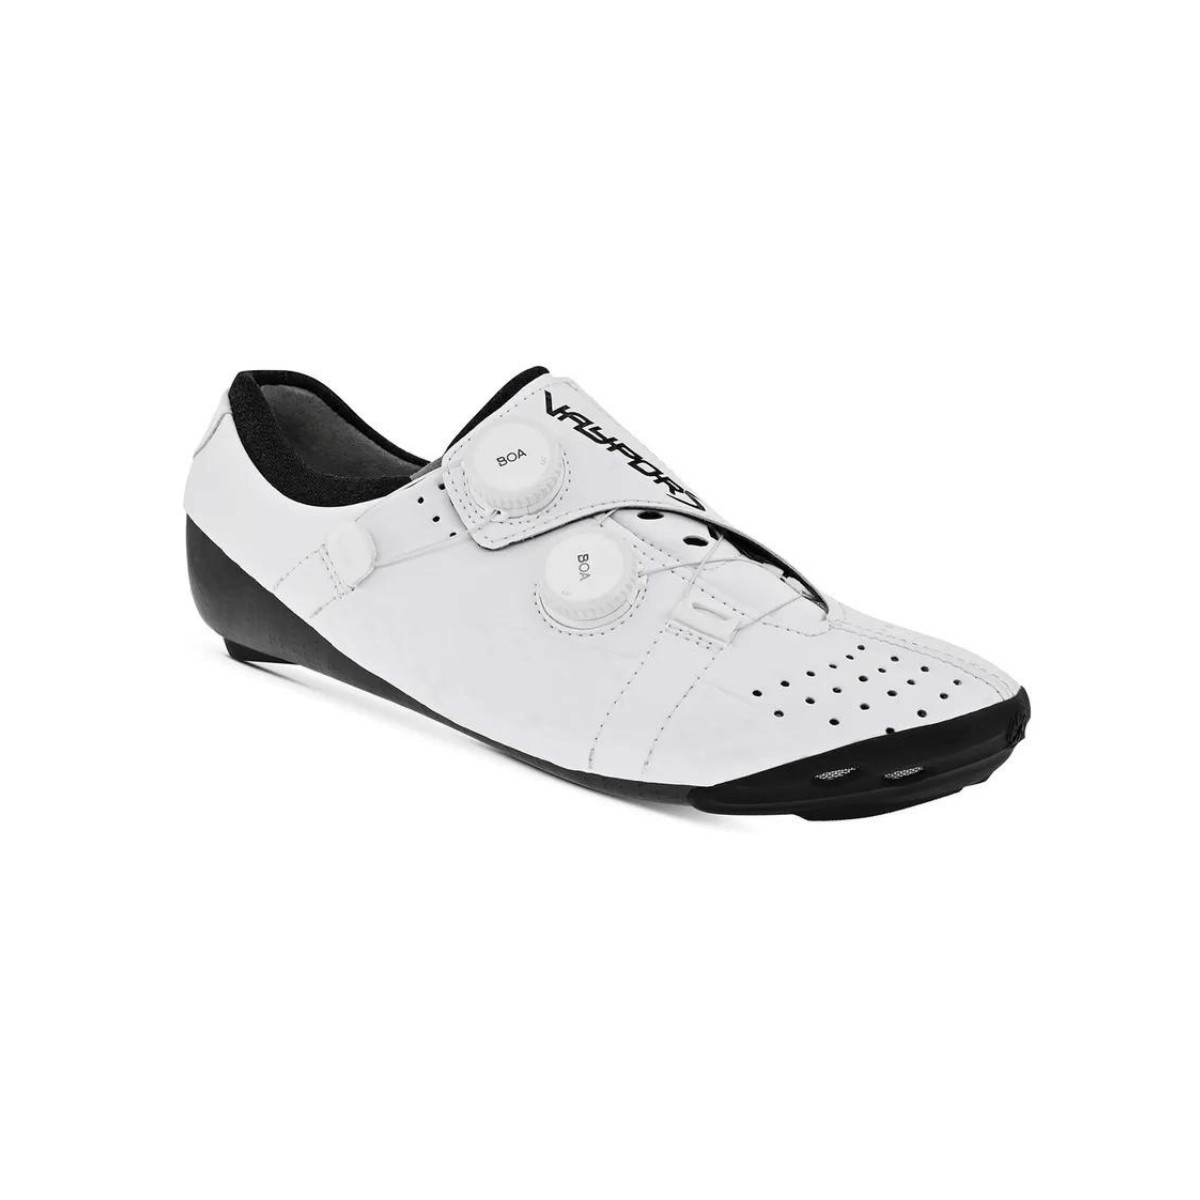 Bont Vaypor S Li2 Shoes White, Size 41 - EUR